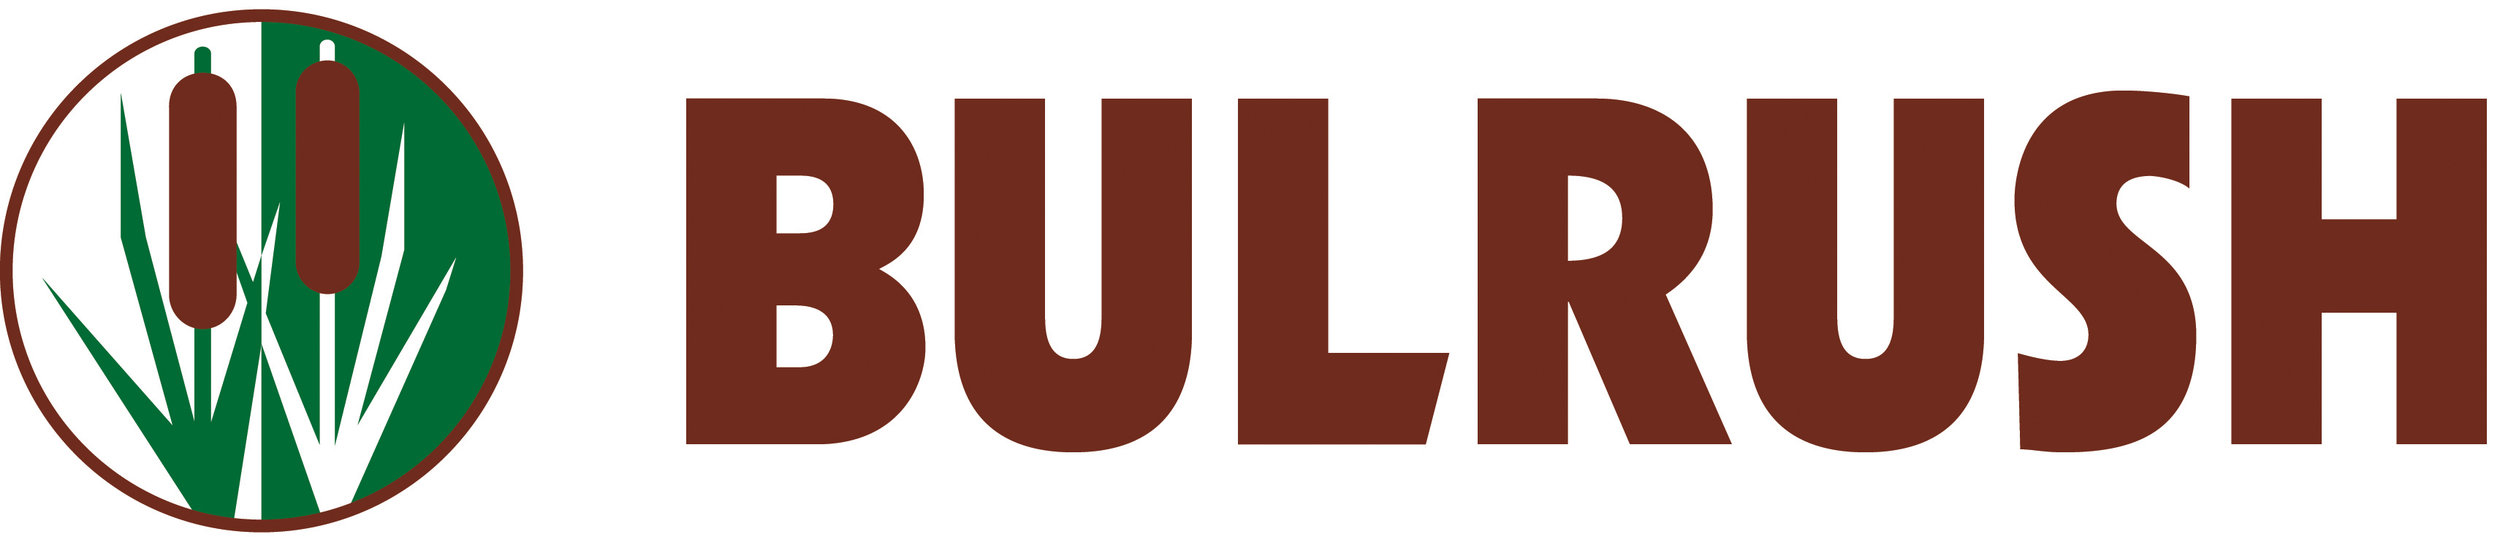 Bulrush - Logo.jpg